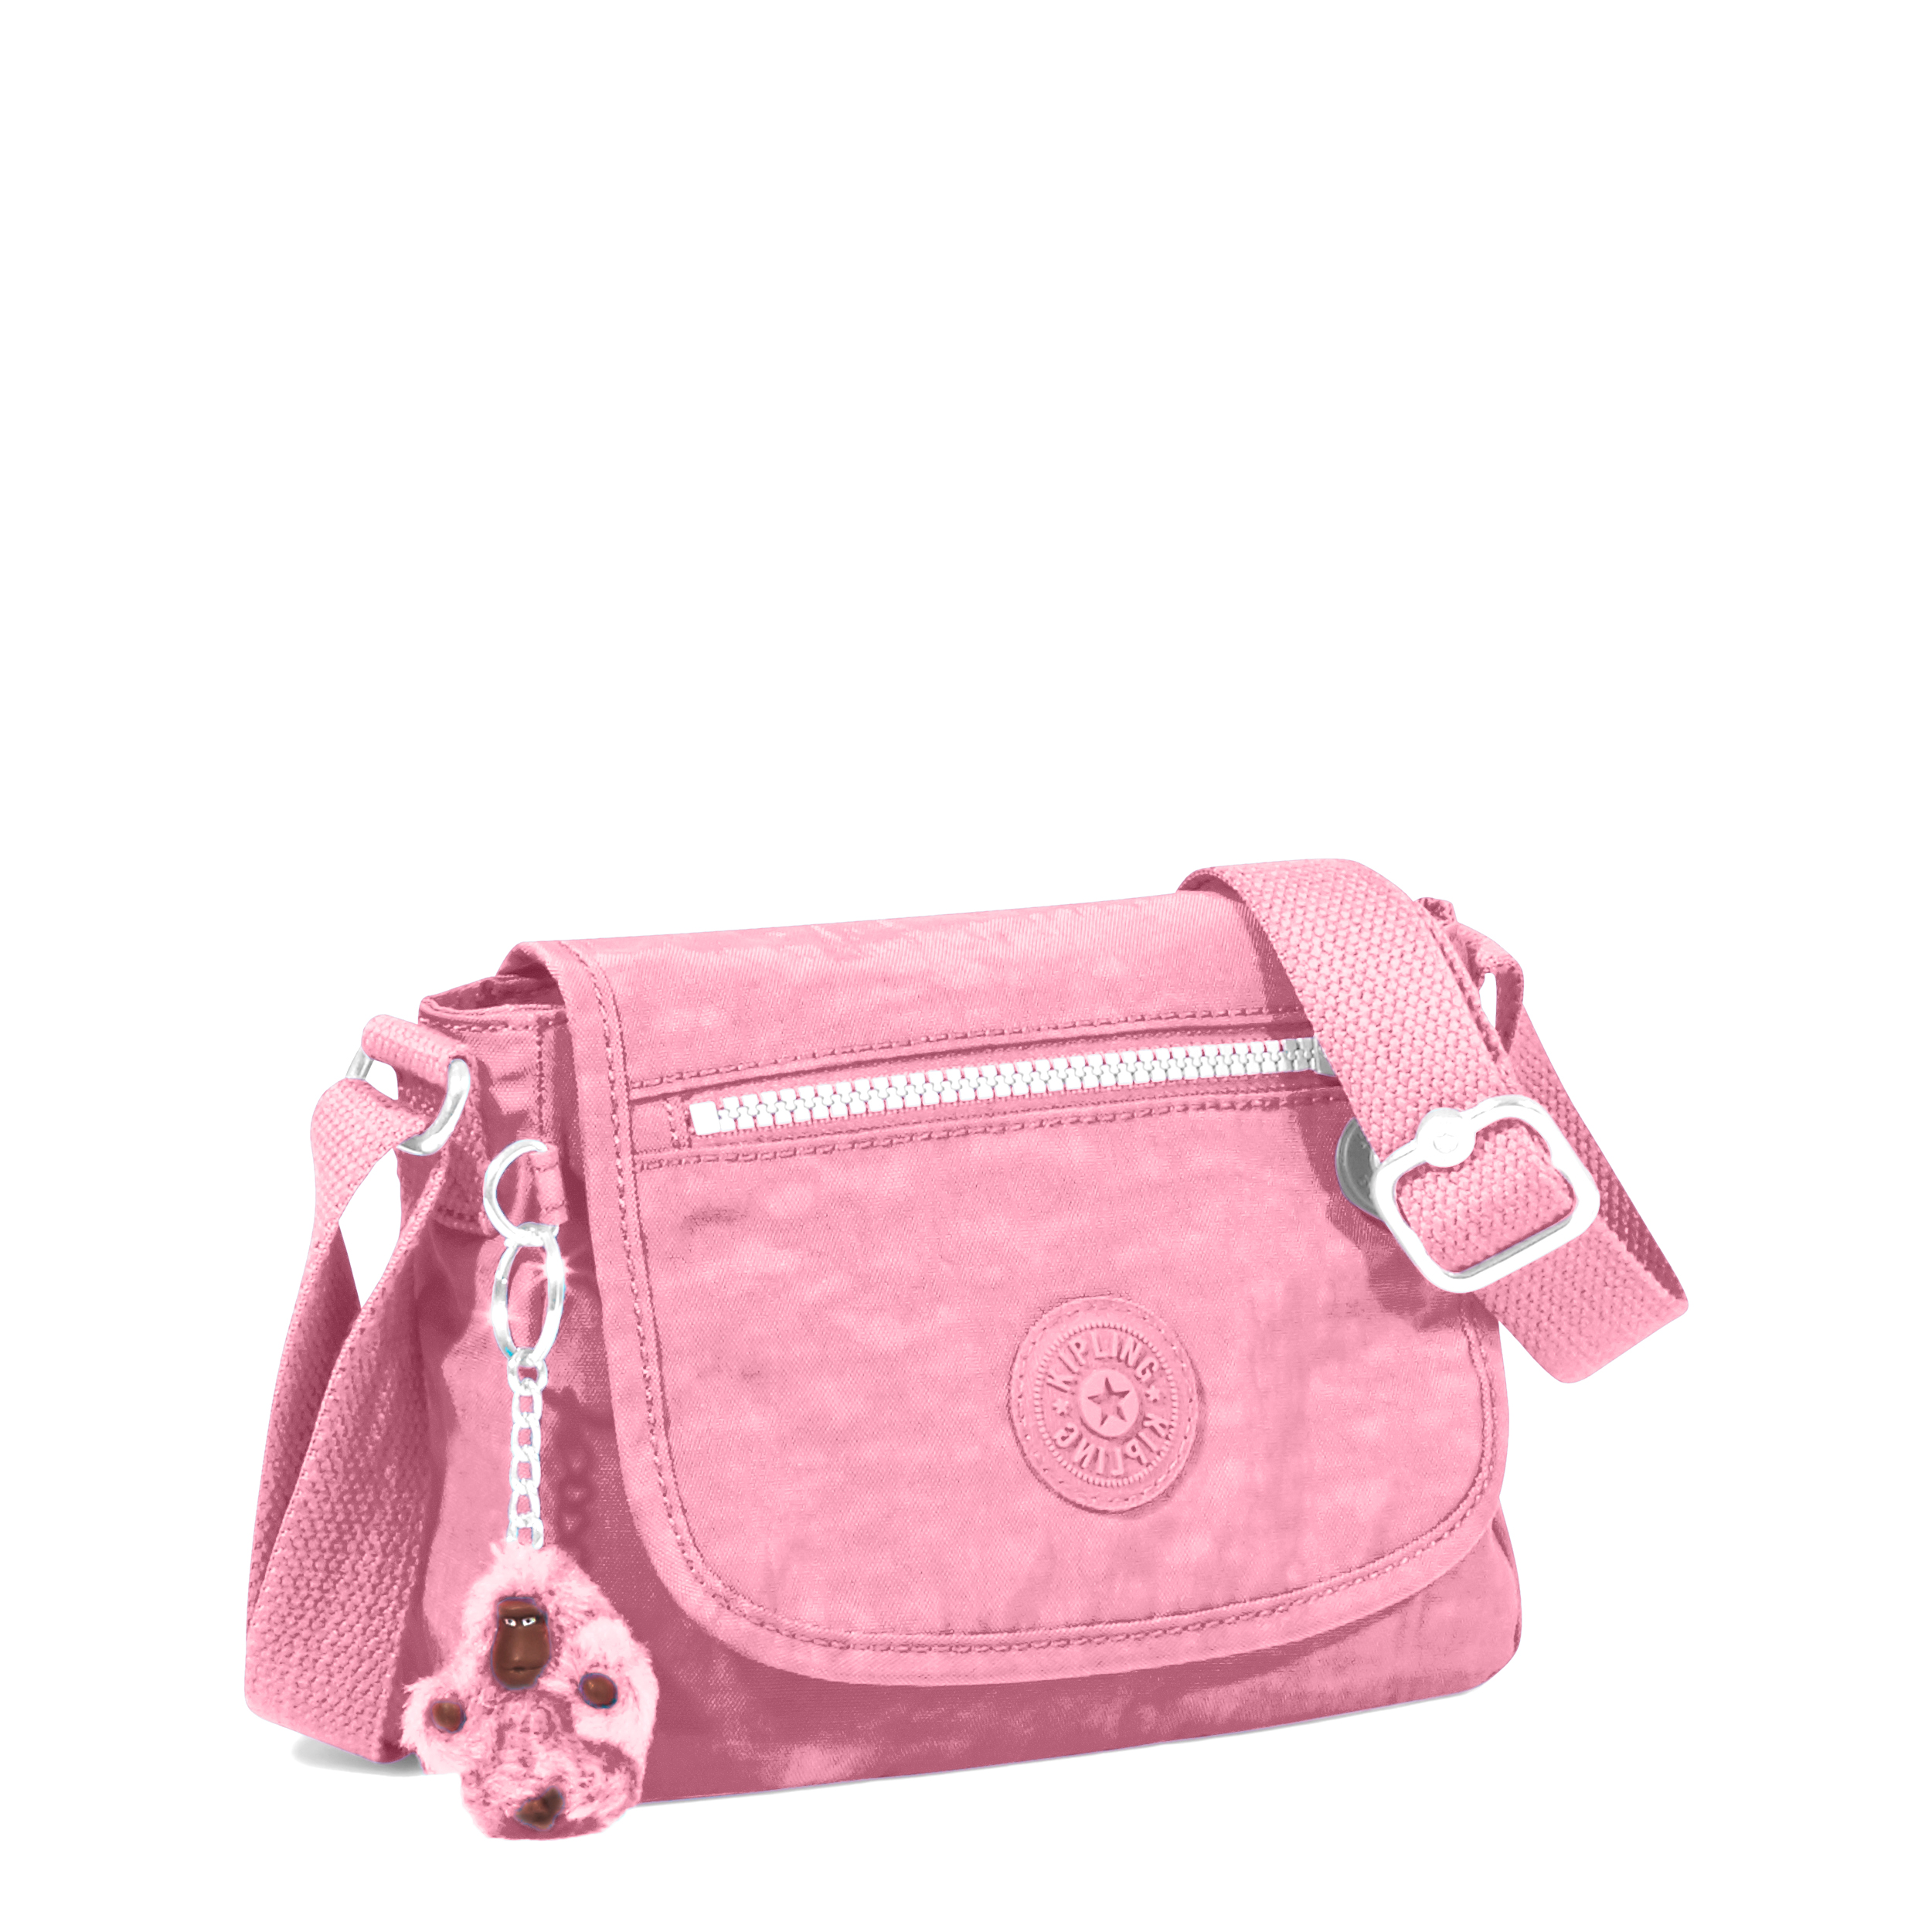 Kipling Sabian Crossbody Mini Bag | eBay